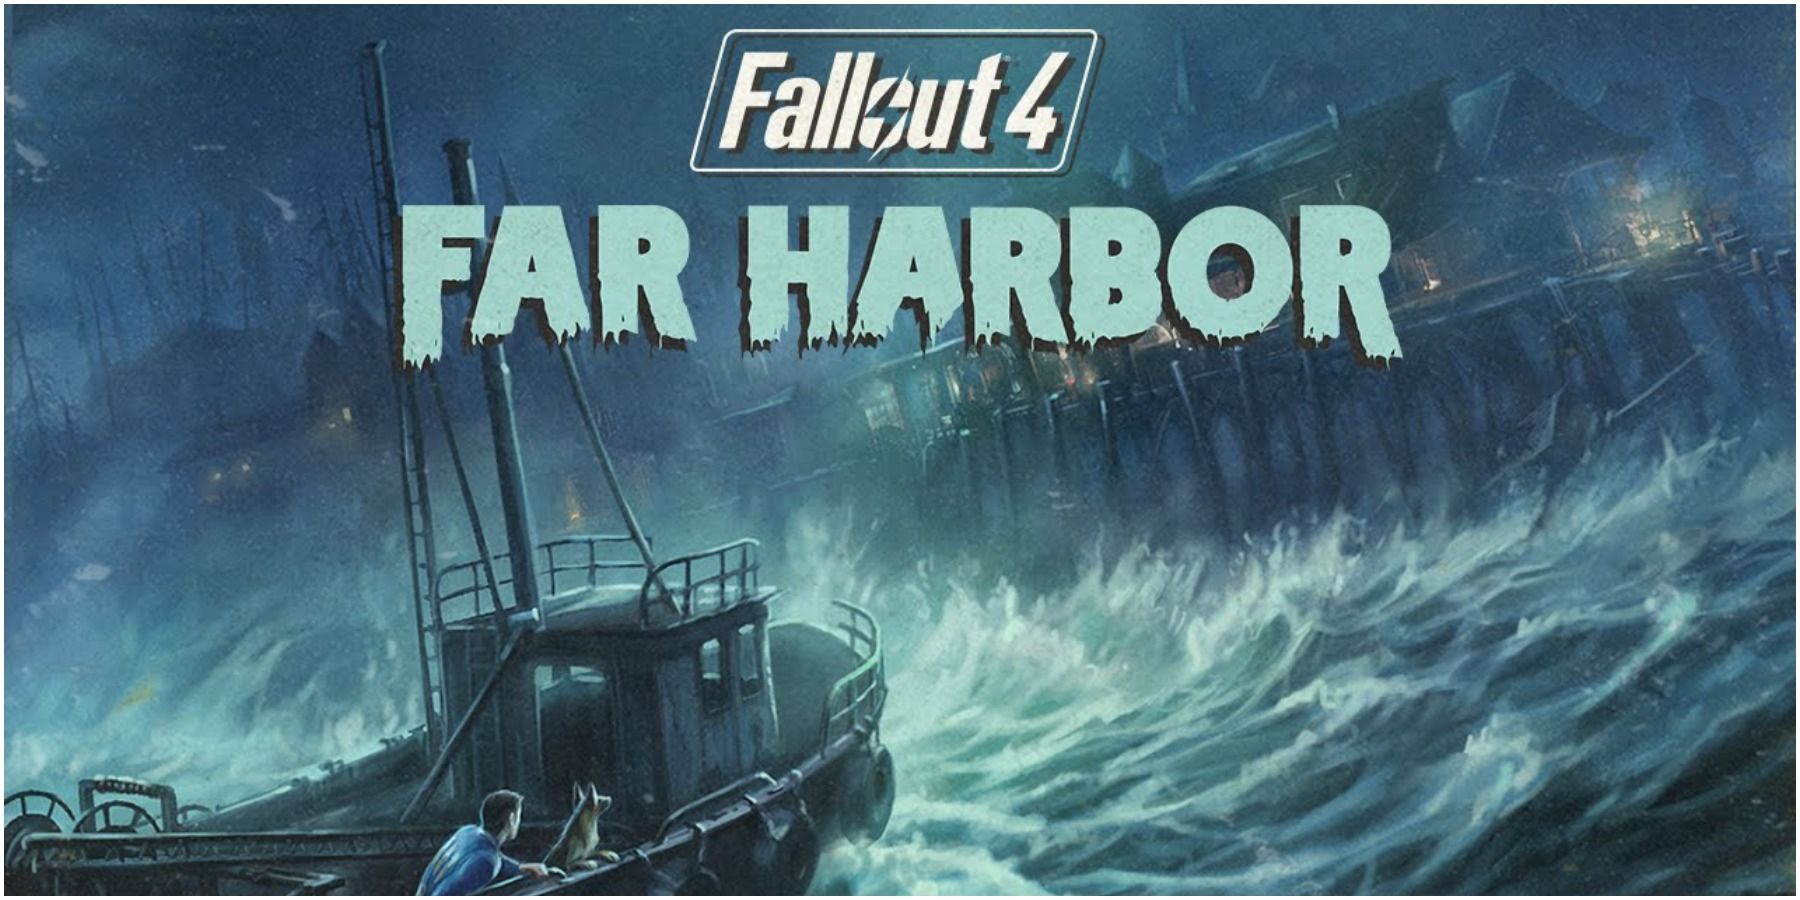 игра fallout 4 far harbor фото 88